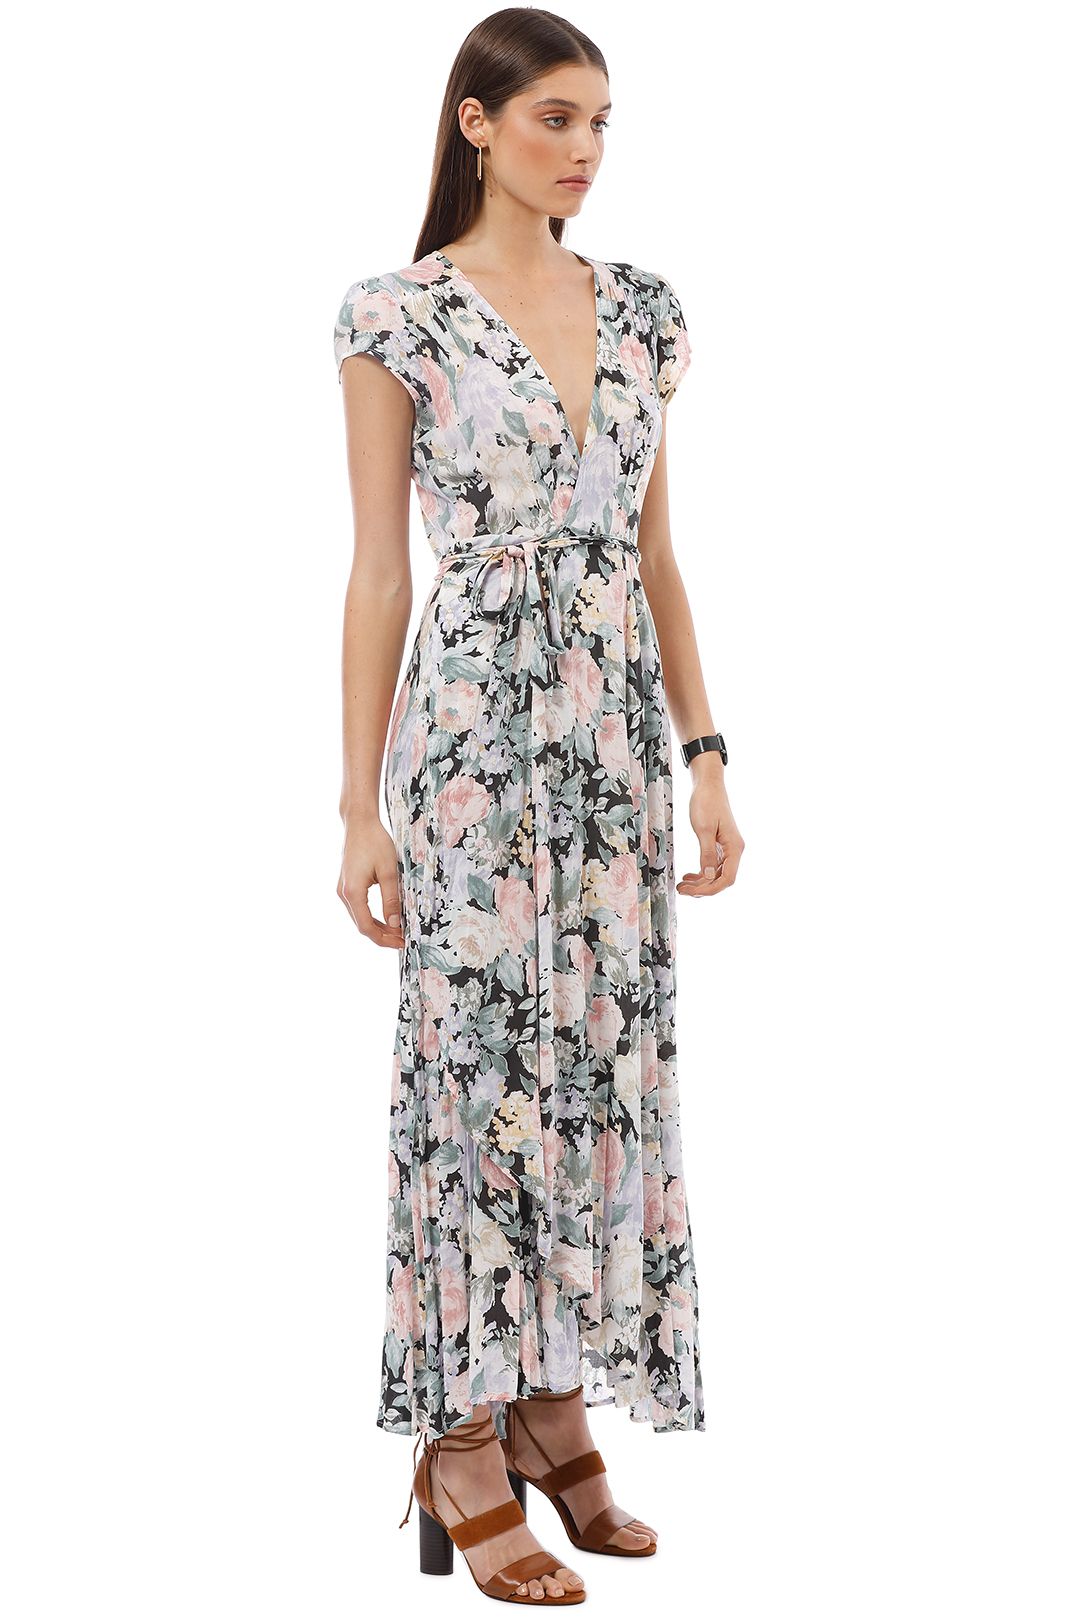 Auguste - Gardenia Goldie Wrap Maxi Dress - Floral - Side